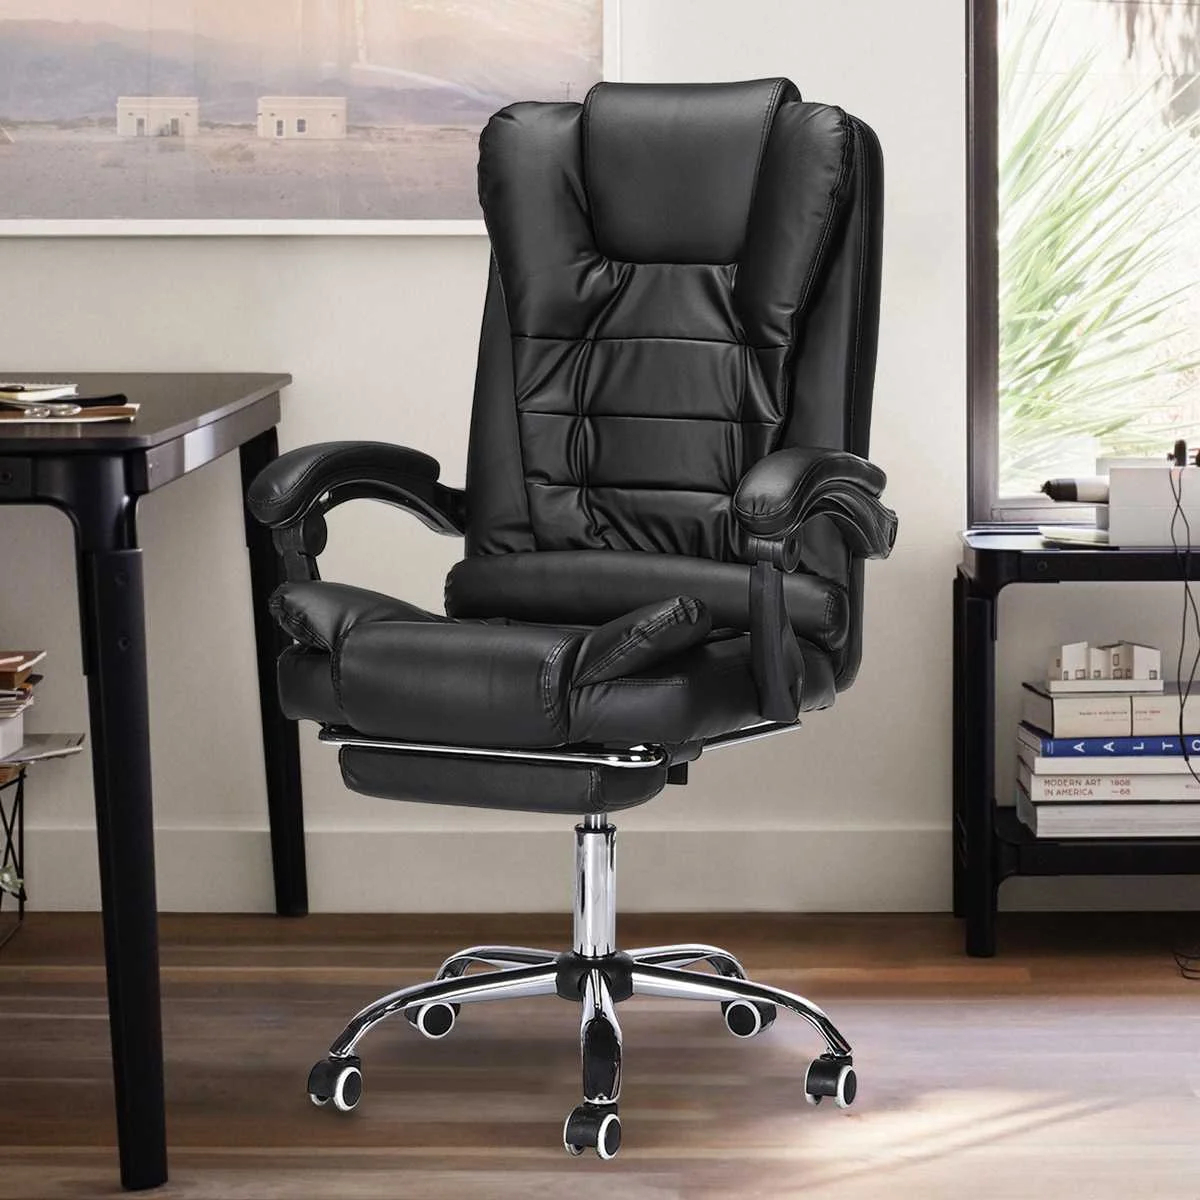 https://ae01.alicdn.com/kf/Seab93e2ca6c549418bfe4c74becbf89a8/Adjustable-Executive-Massage-Office-Chair-Reclining-High-Back-Chair-Big-Tall-Leather-Ergonomic-Swivel-Task-Chair.jpg